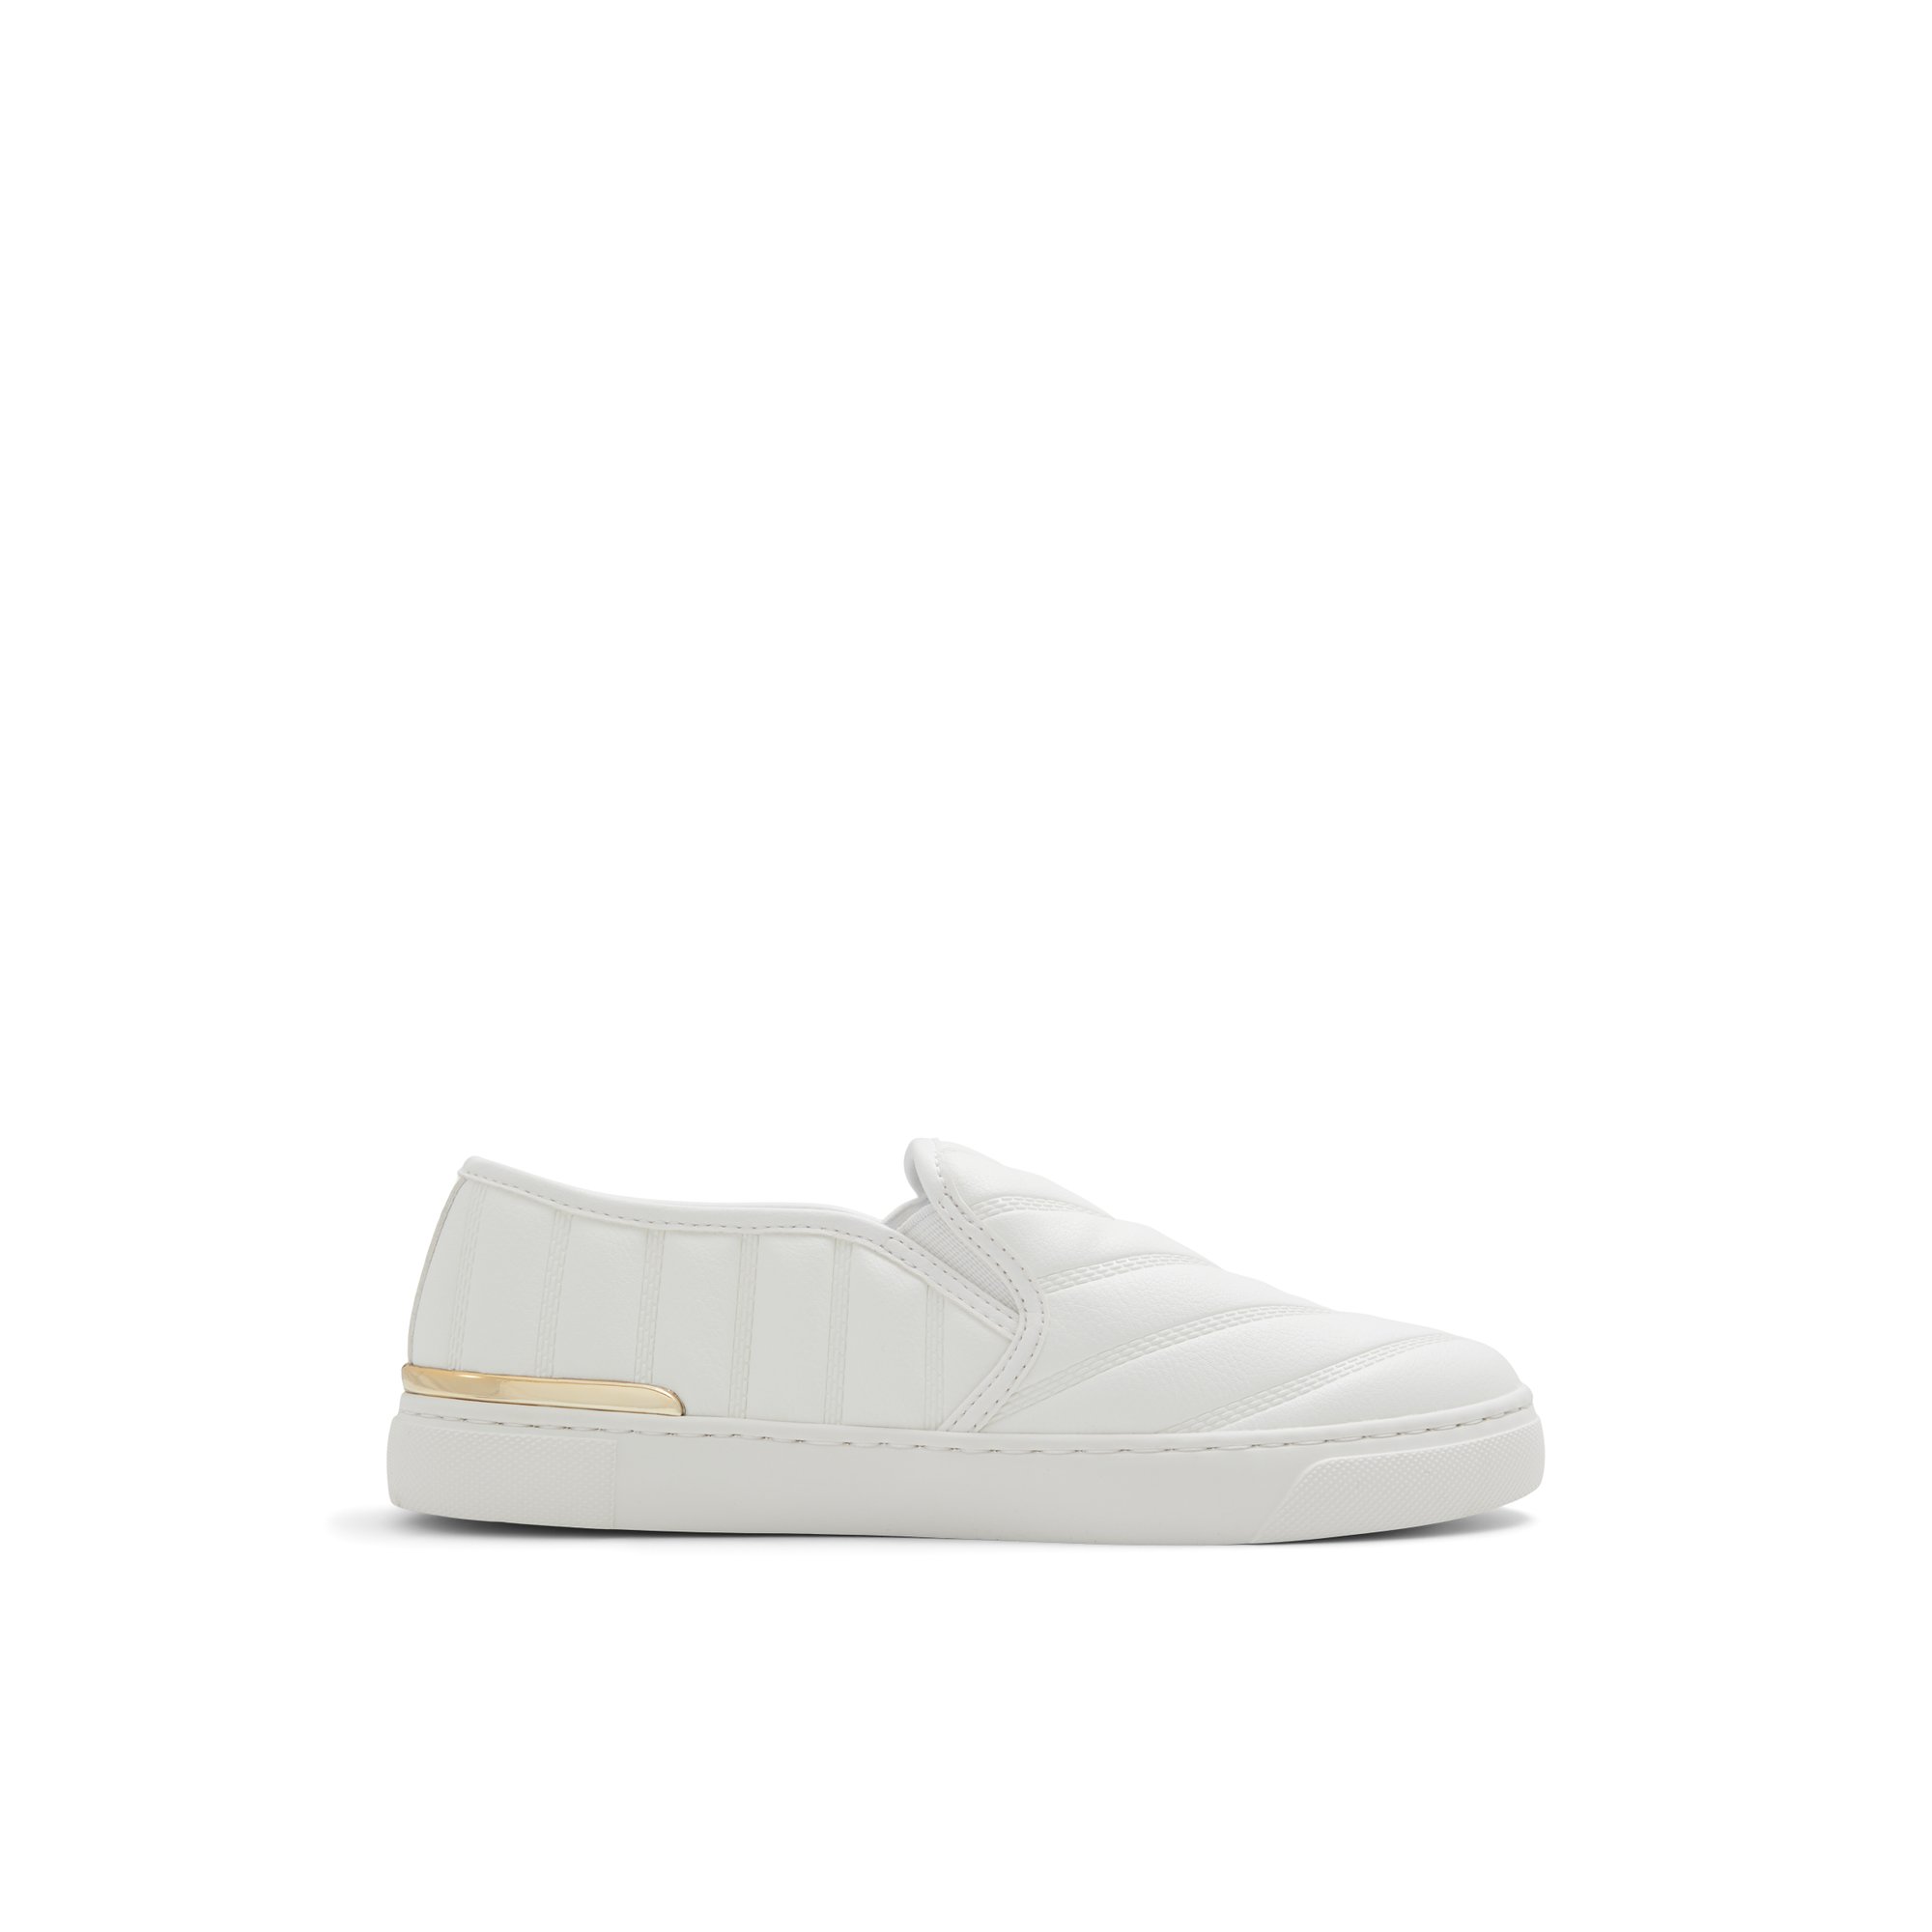 ALDO Crendann - Women's Slip on Sneaker Sneakers - White